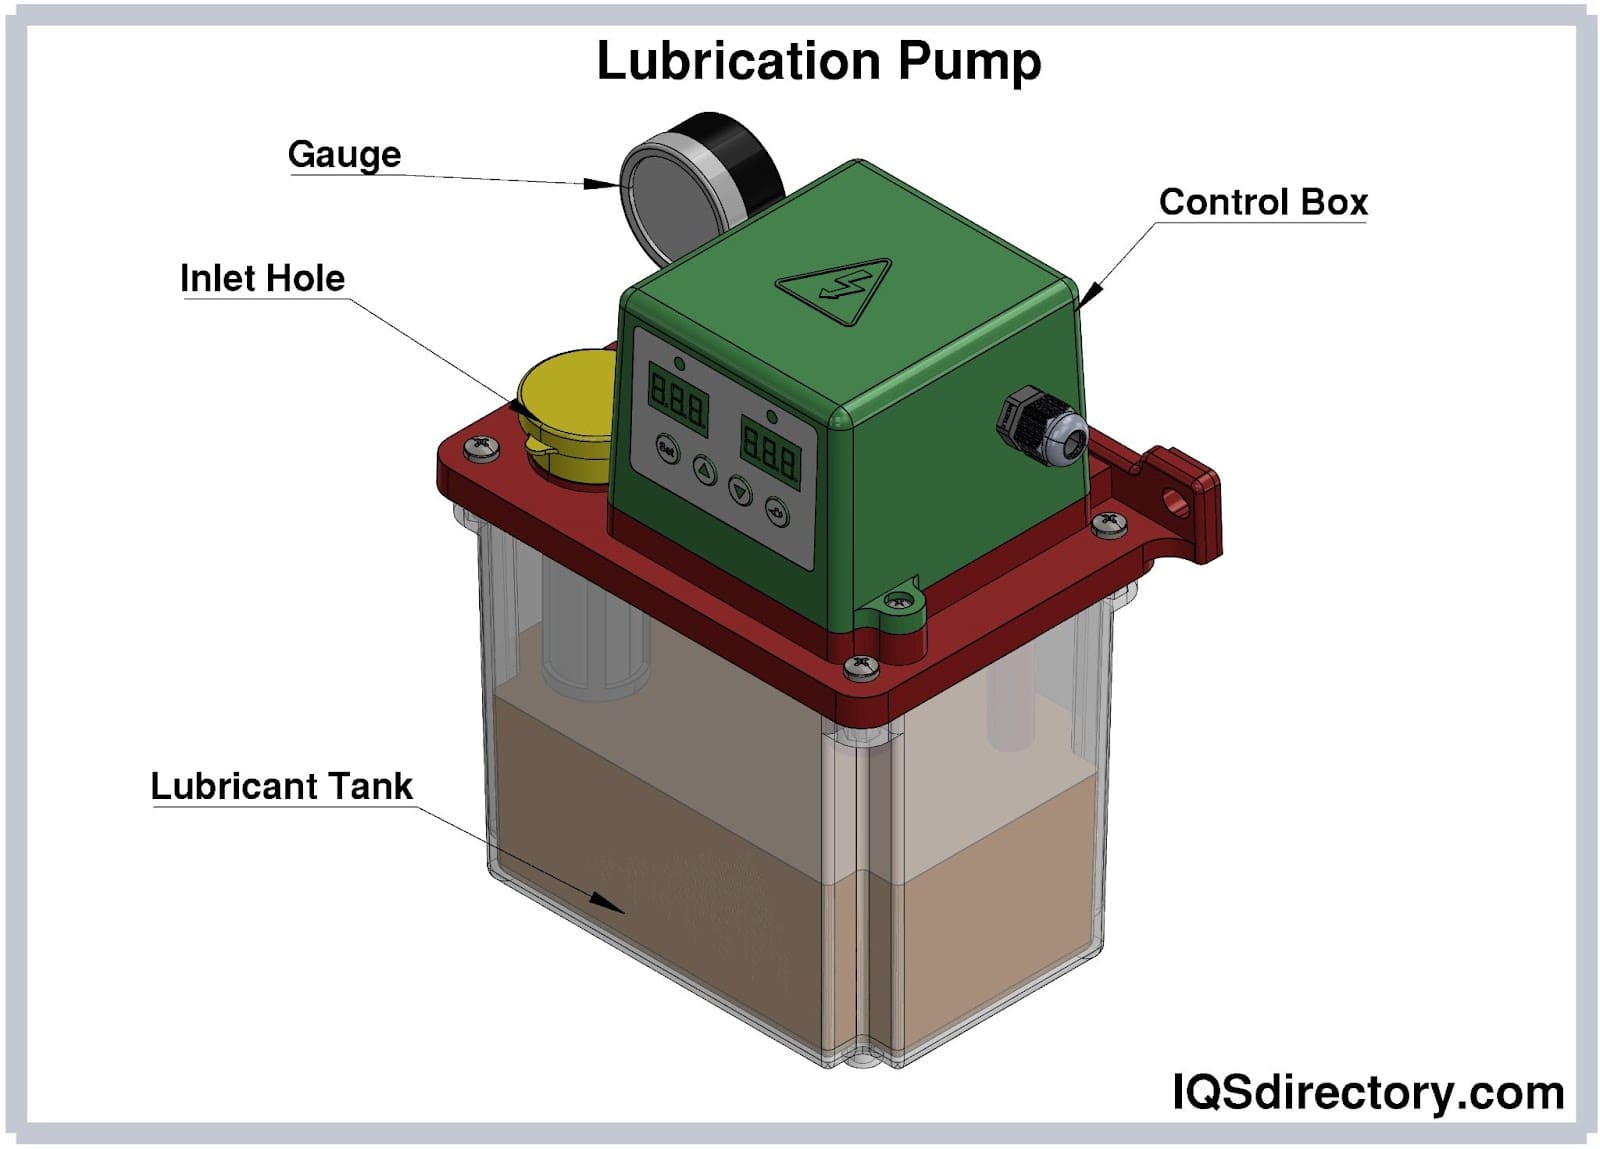 Lubrication Pump